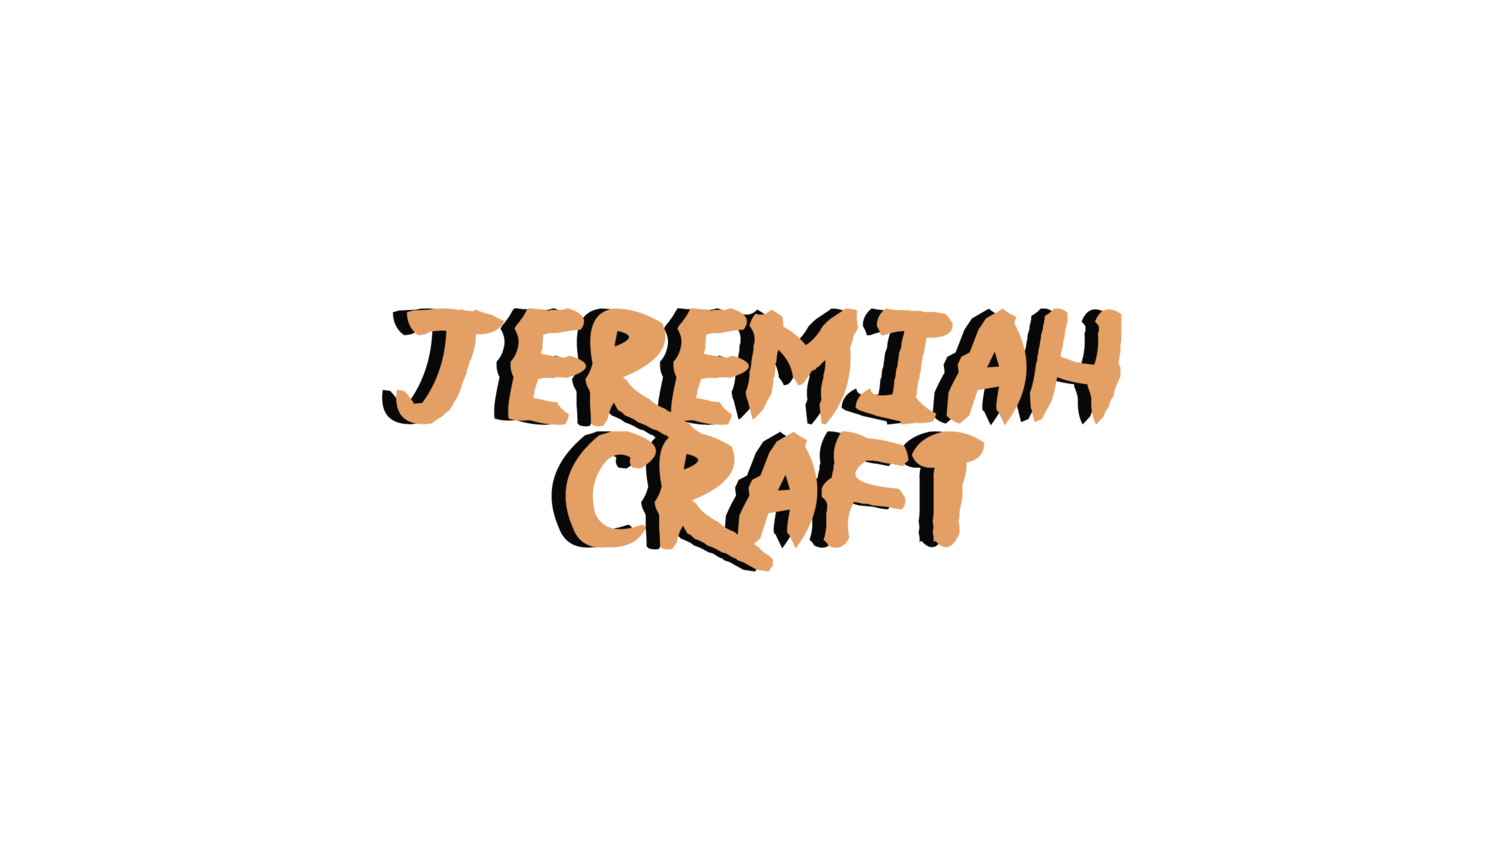 Jeremiah Craft